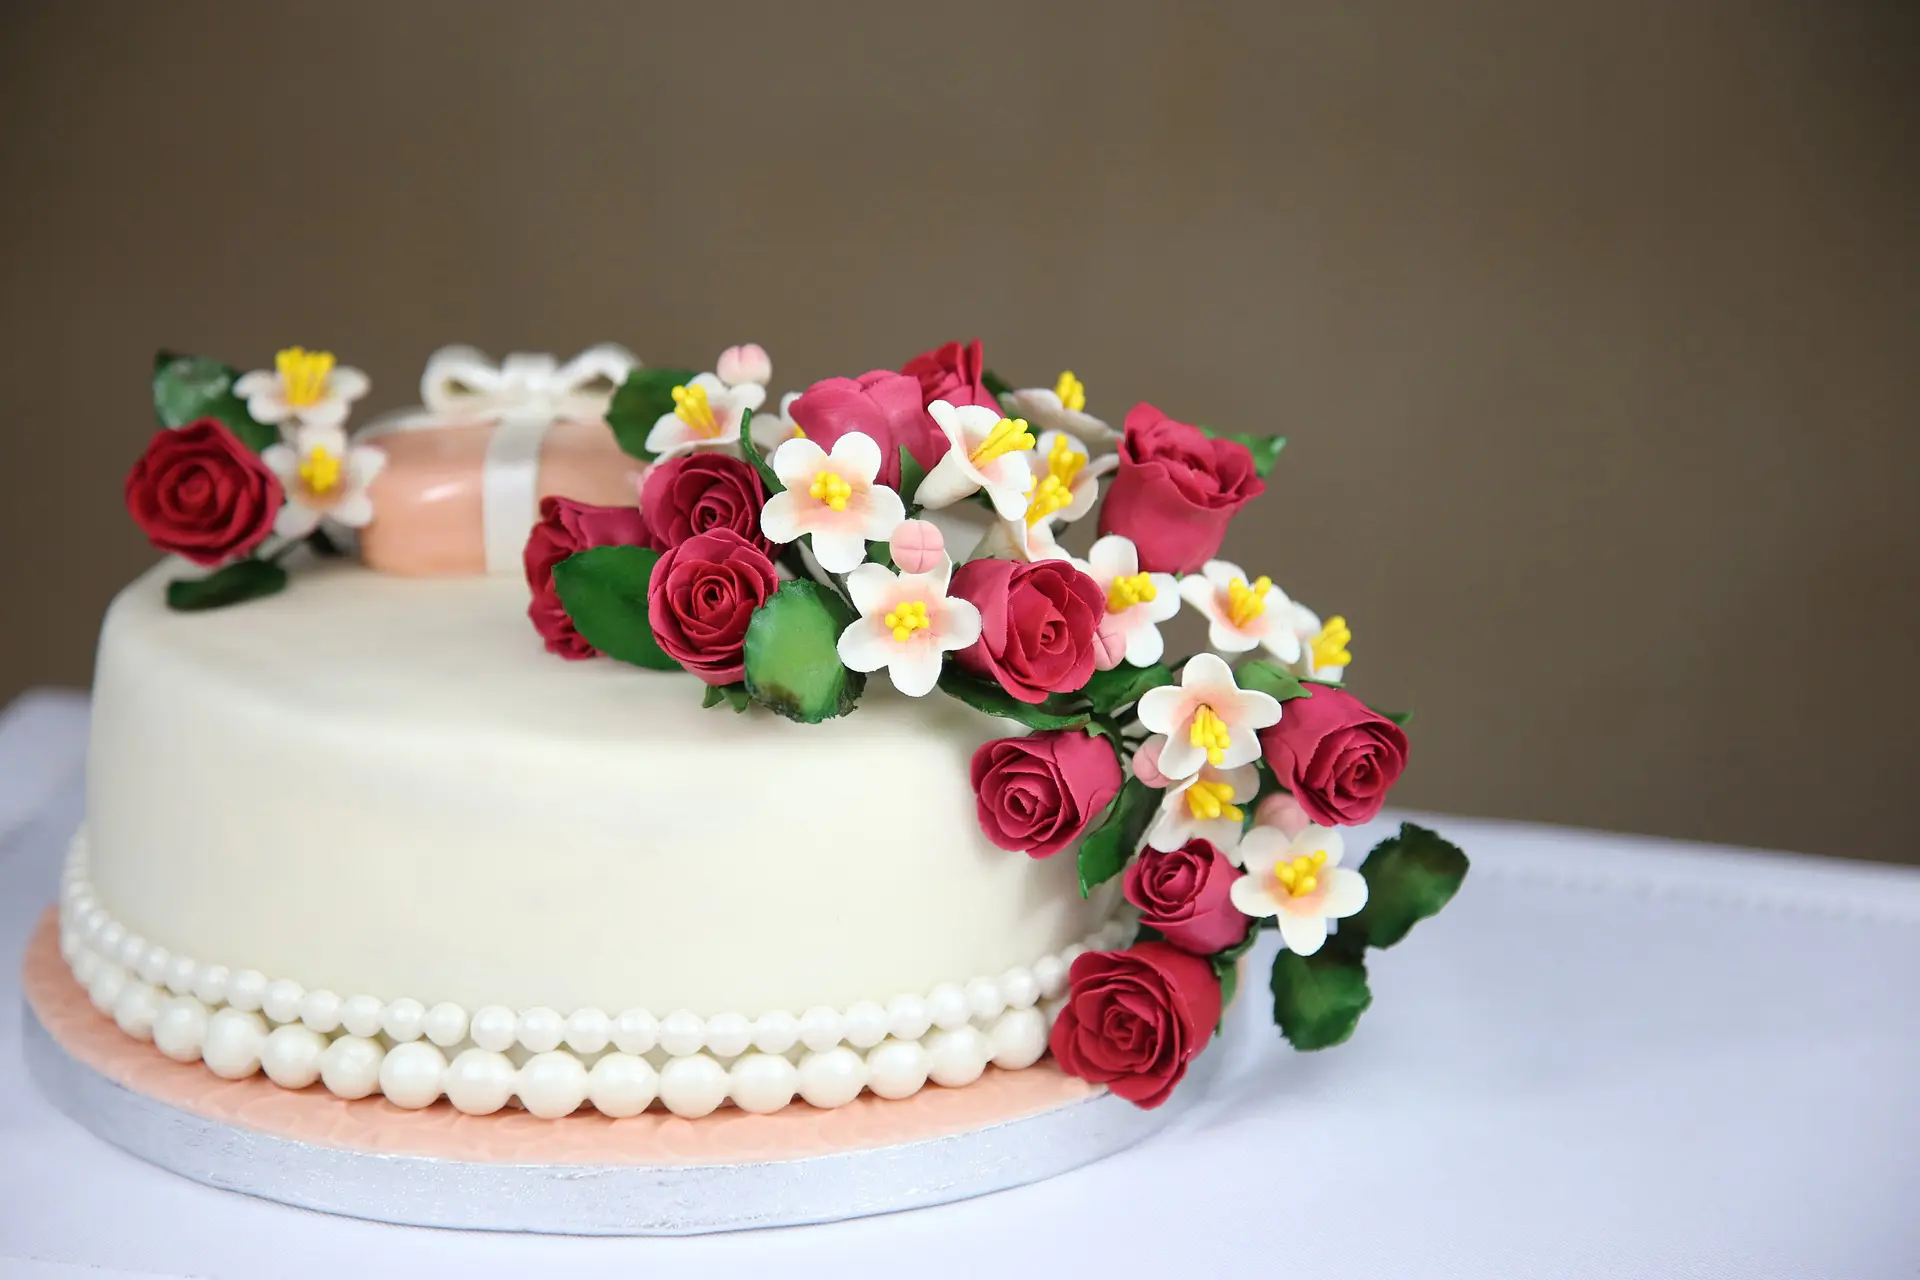 German Black Forest - Cake Shop in Kottayam, Kerala | Online Cake Delivery  | Cutie Pie - Kottayam